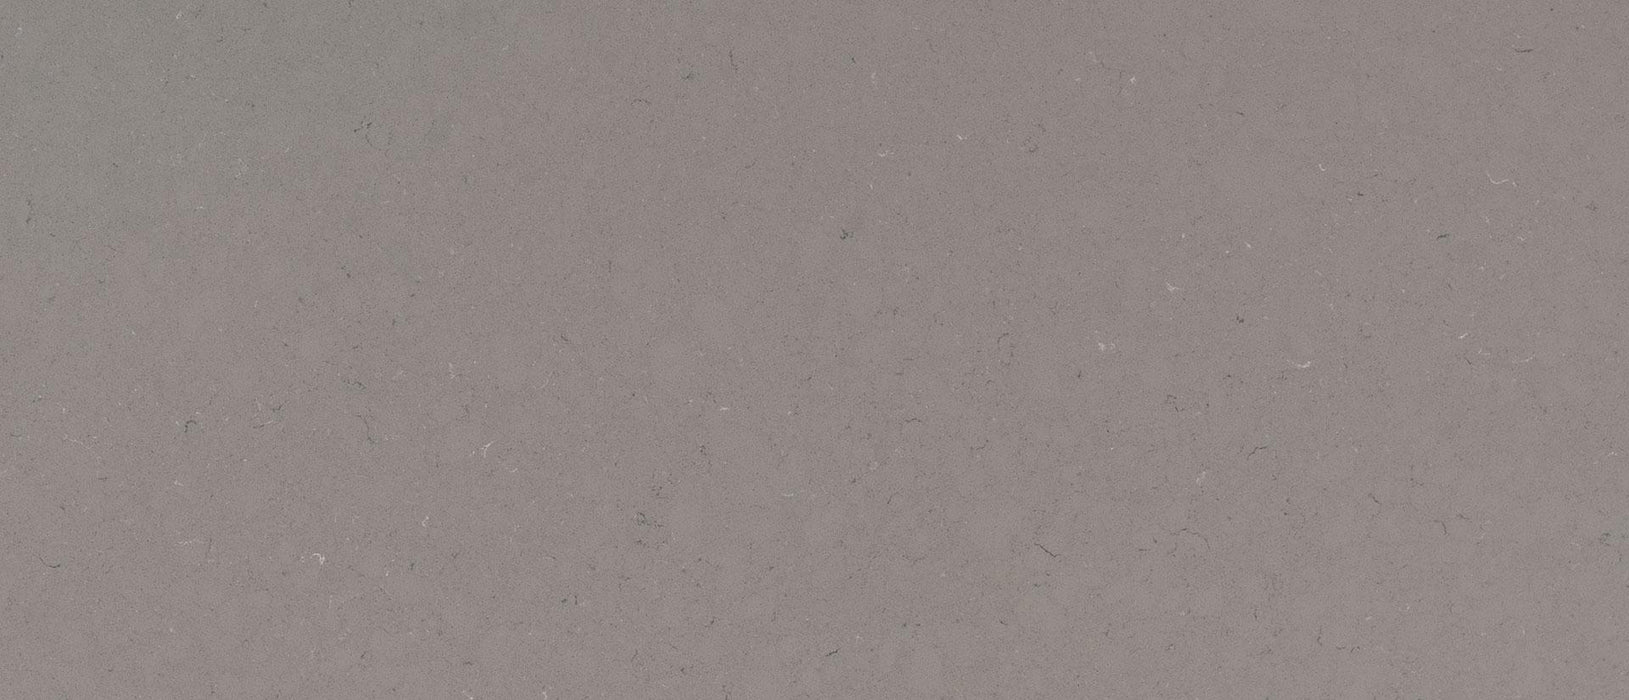 Fossil Gray 127x75 2 cm Polished Quartz Slab